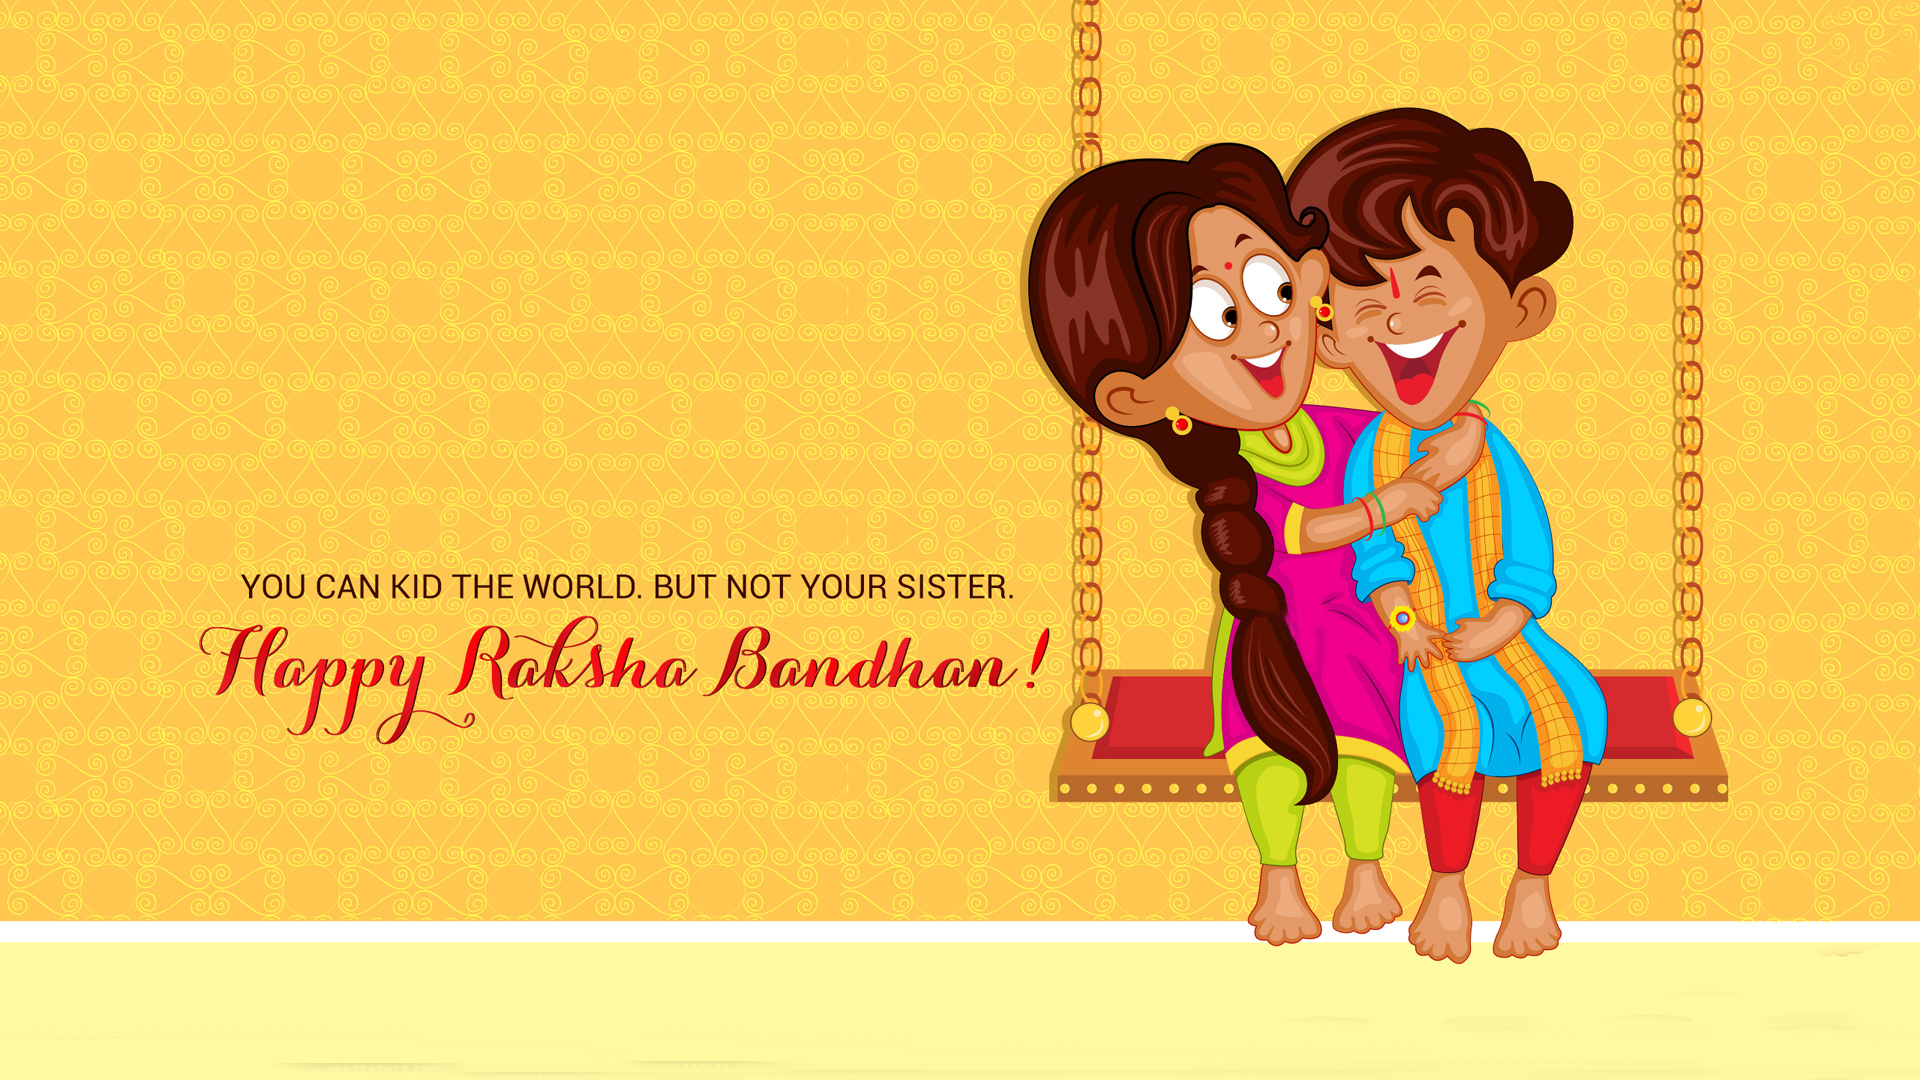 20 Best Raksha Bandhan 2015 Images HD 3d Wallpapers with Brothers & Sisters  Free Download for Facebook Cover Pics, Desktop